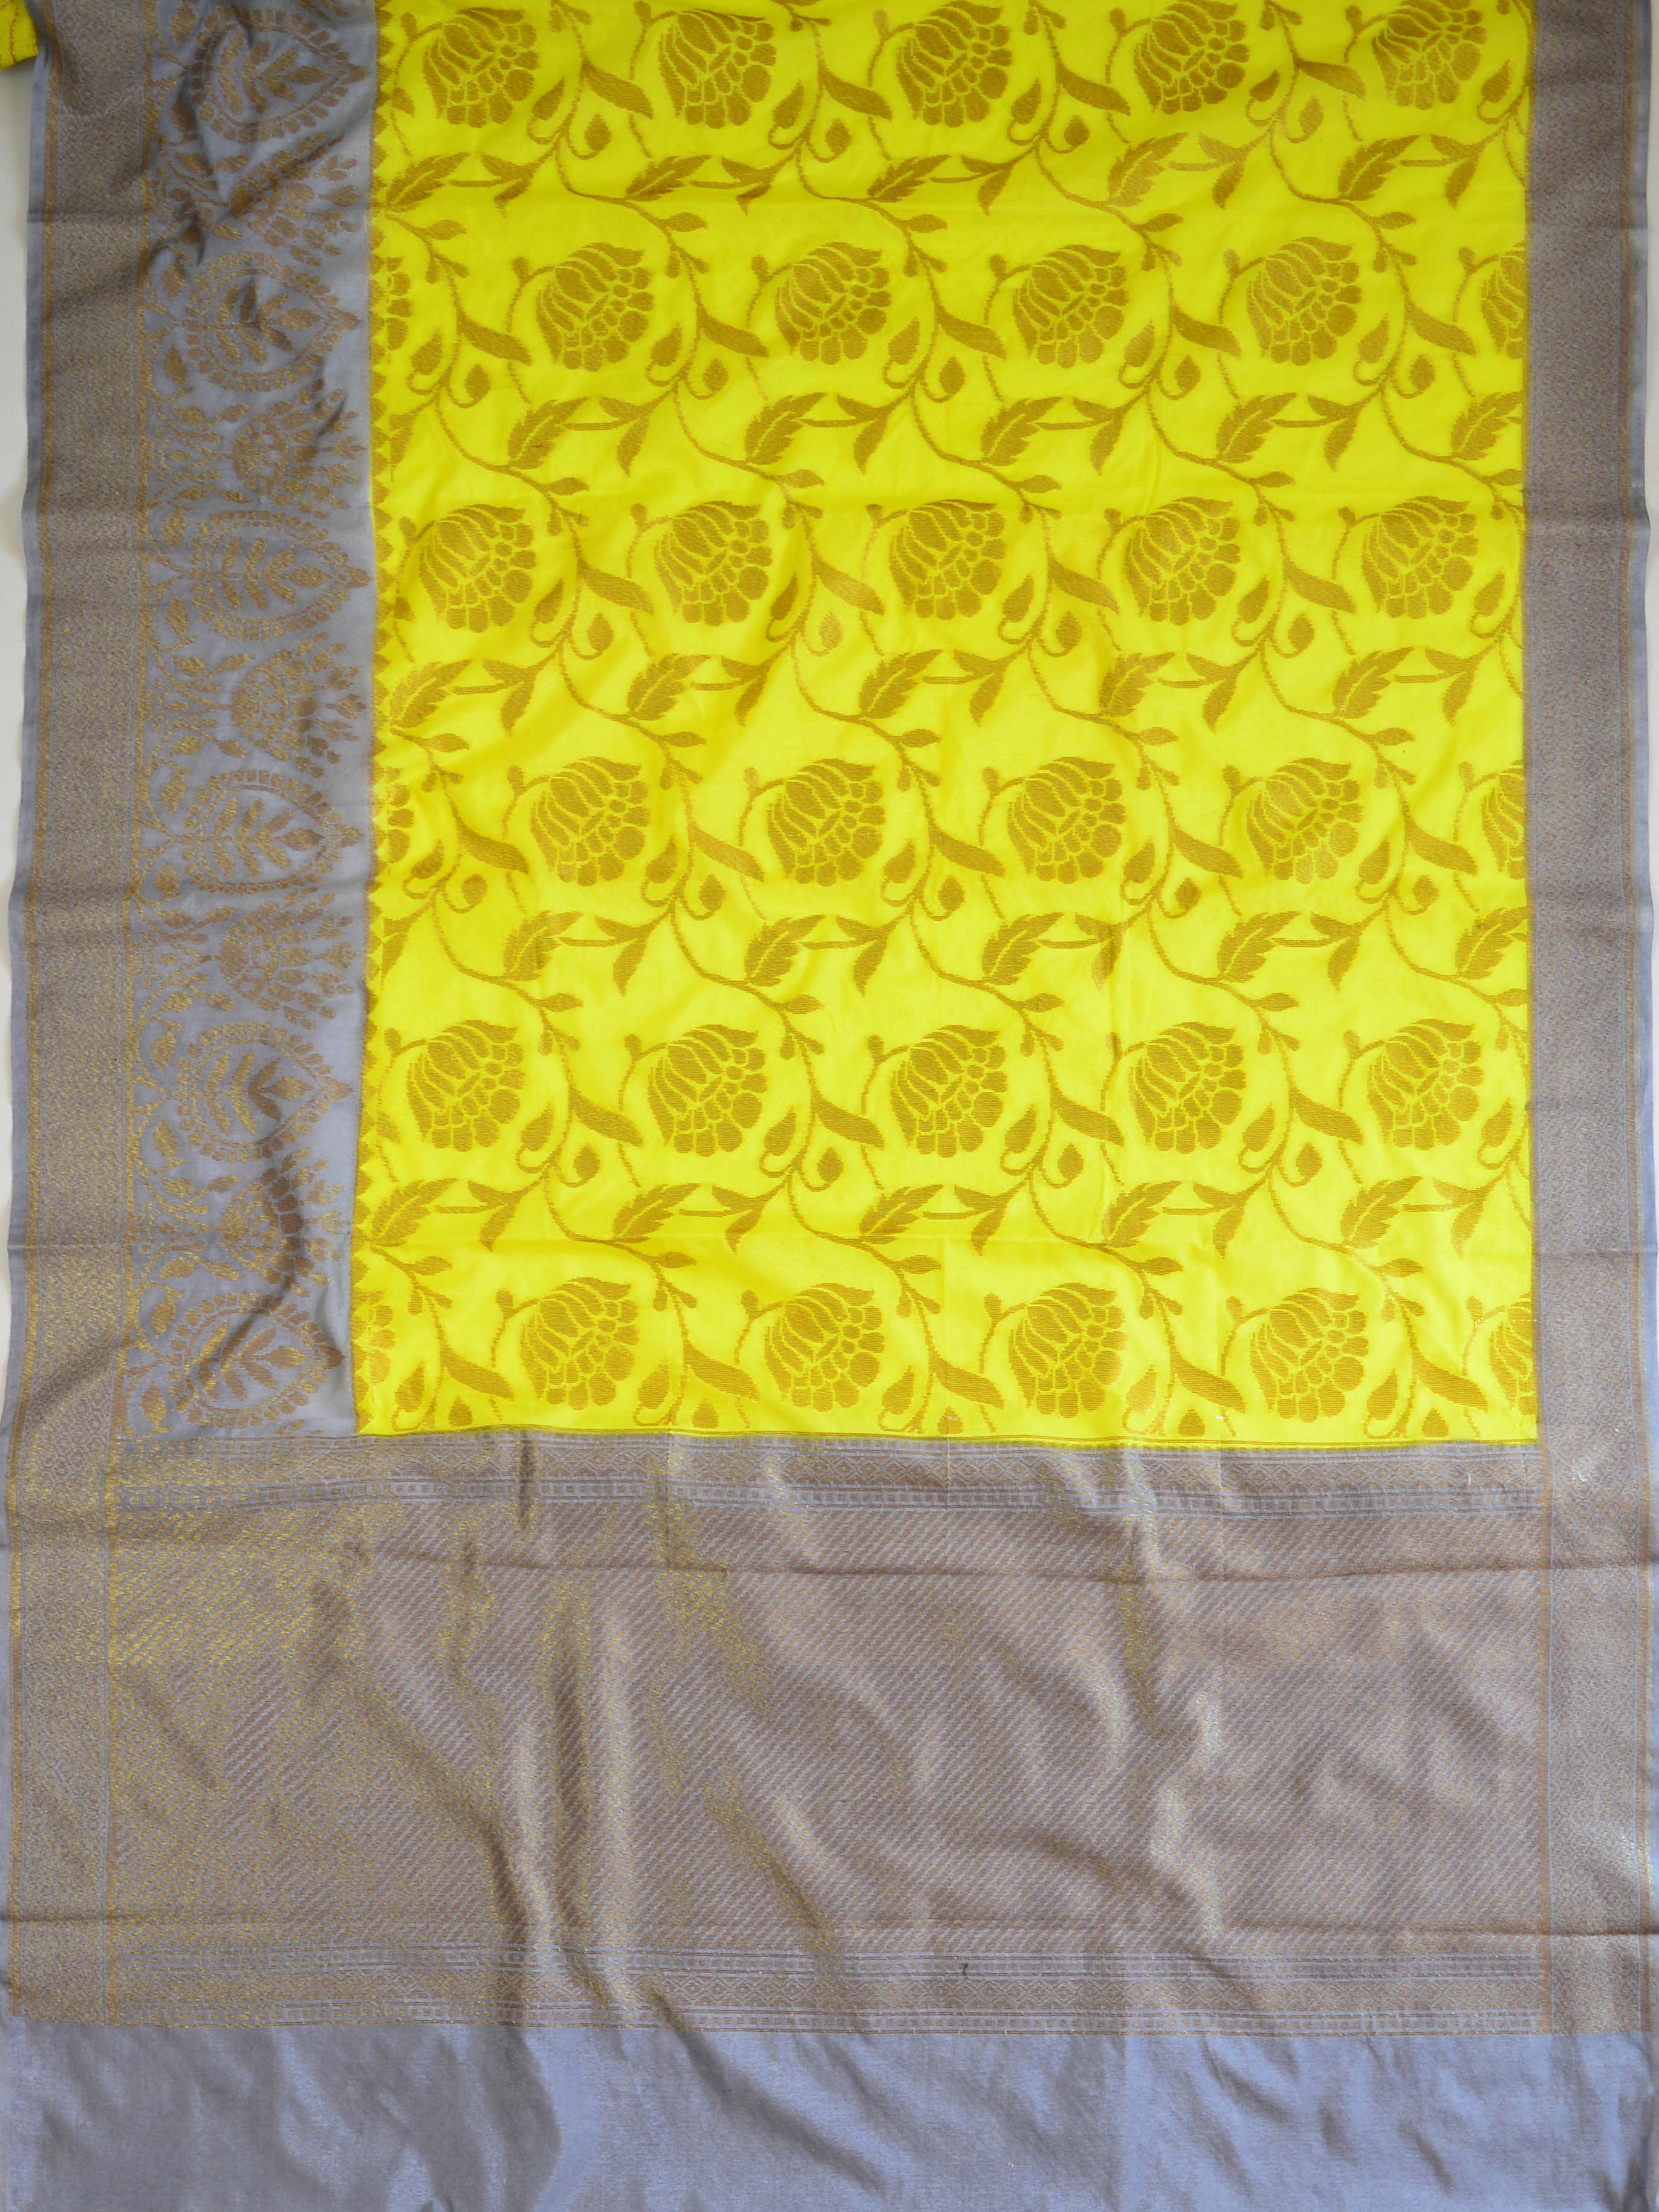 Banarasee Handwoven Semi Silk Saree With Contrast Border-Yellow & Grey